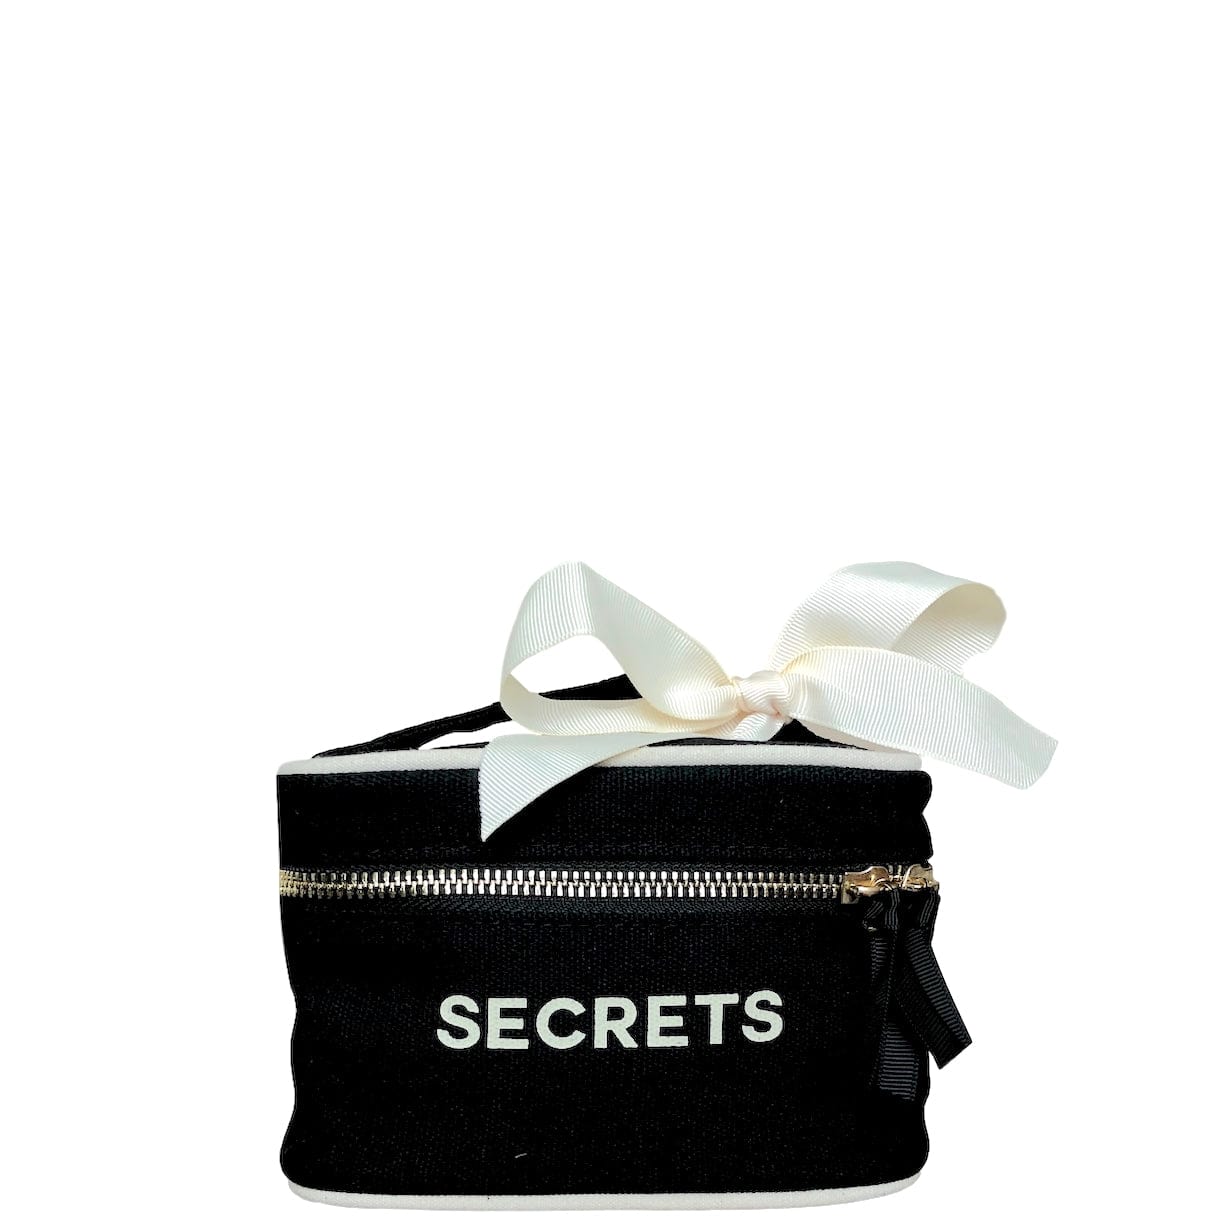 Mini Beauty Box, Secrets - Home Storage, Home Organizing, Durable Metal Zipper, Laminated lining, White Print, Black Color | Bag-all